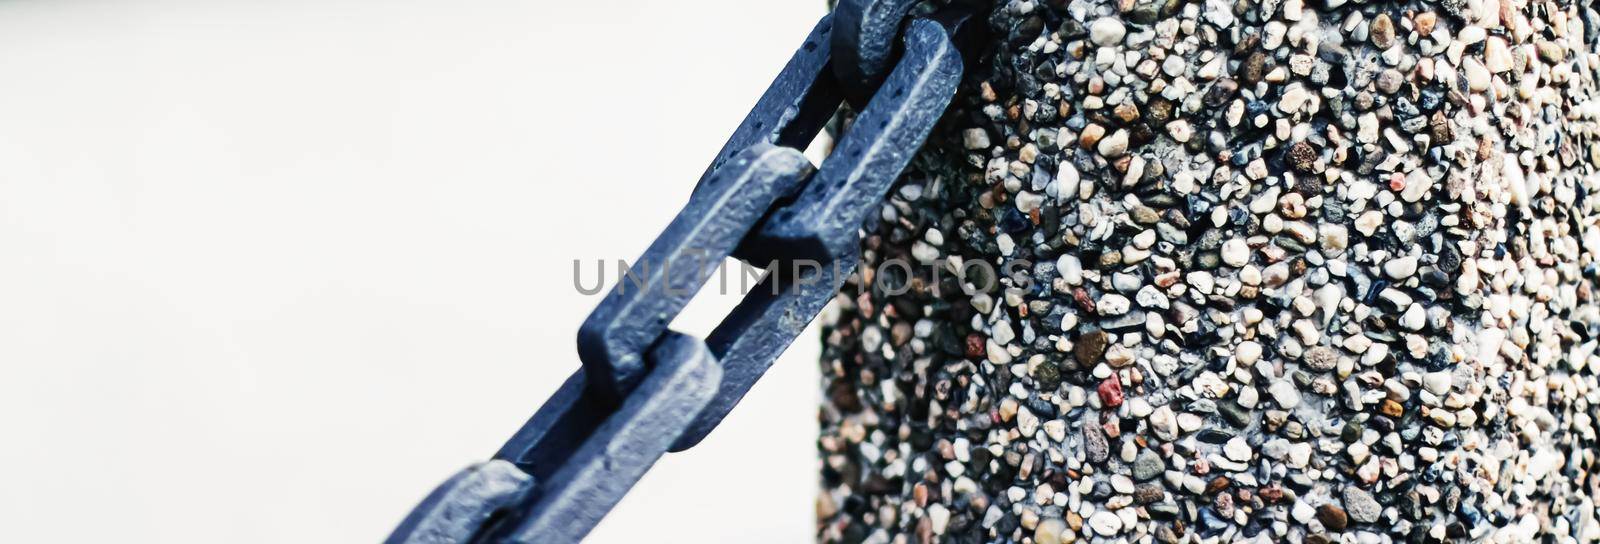 Metal chain closeup, marine background by Anneleven